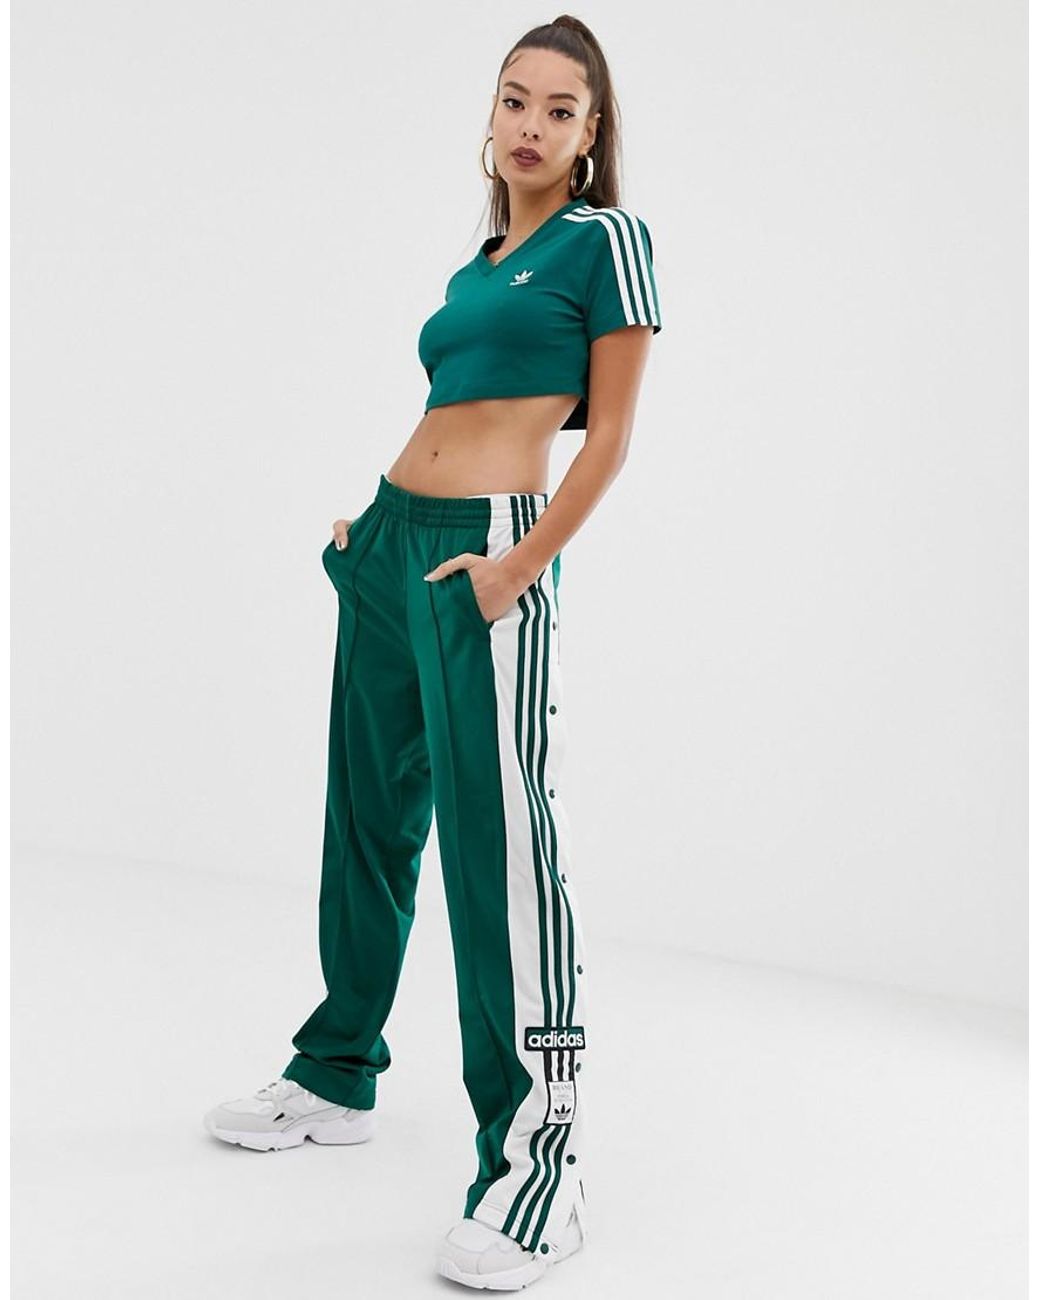 Chandal Adidas Mujer Verde Flash Sales, 59% OFF | bollenberg.com